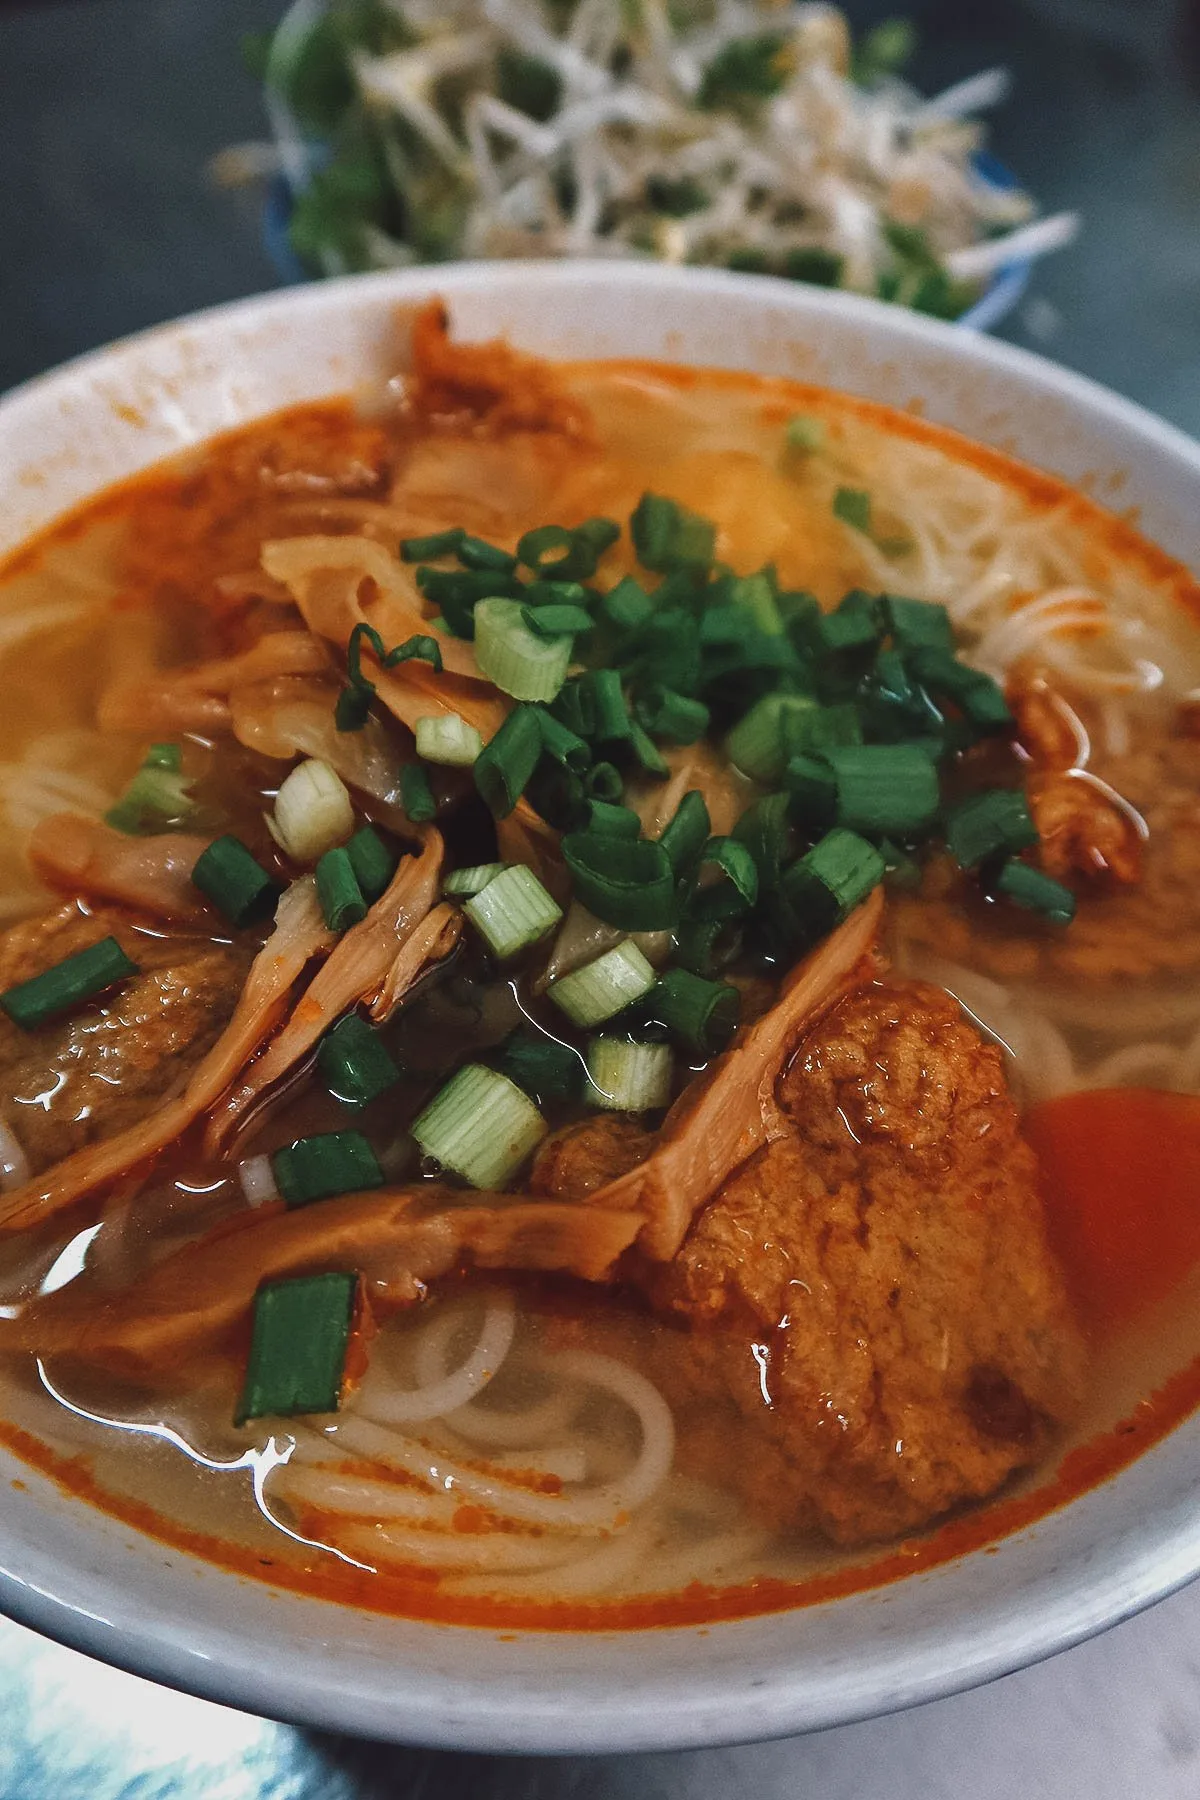 Fish cake noodle soup at a restaurant in Da Nang